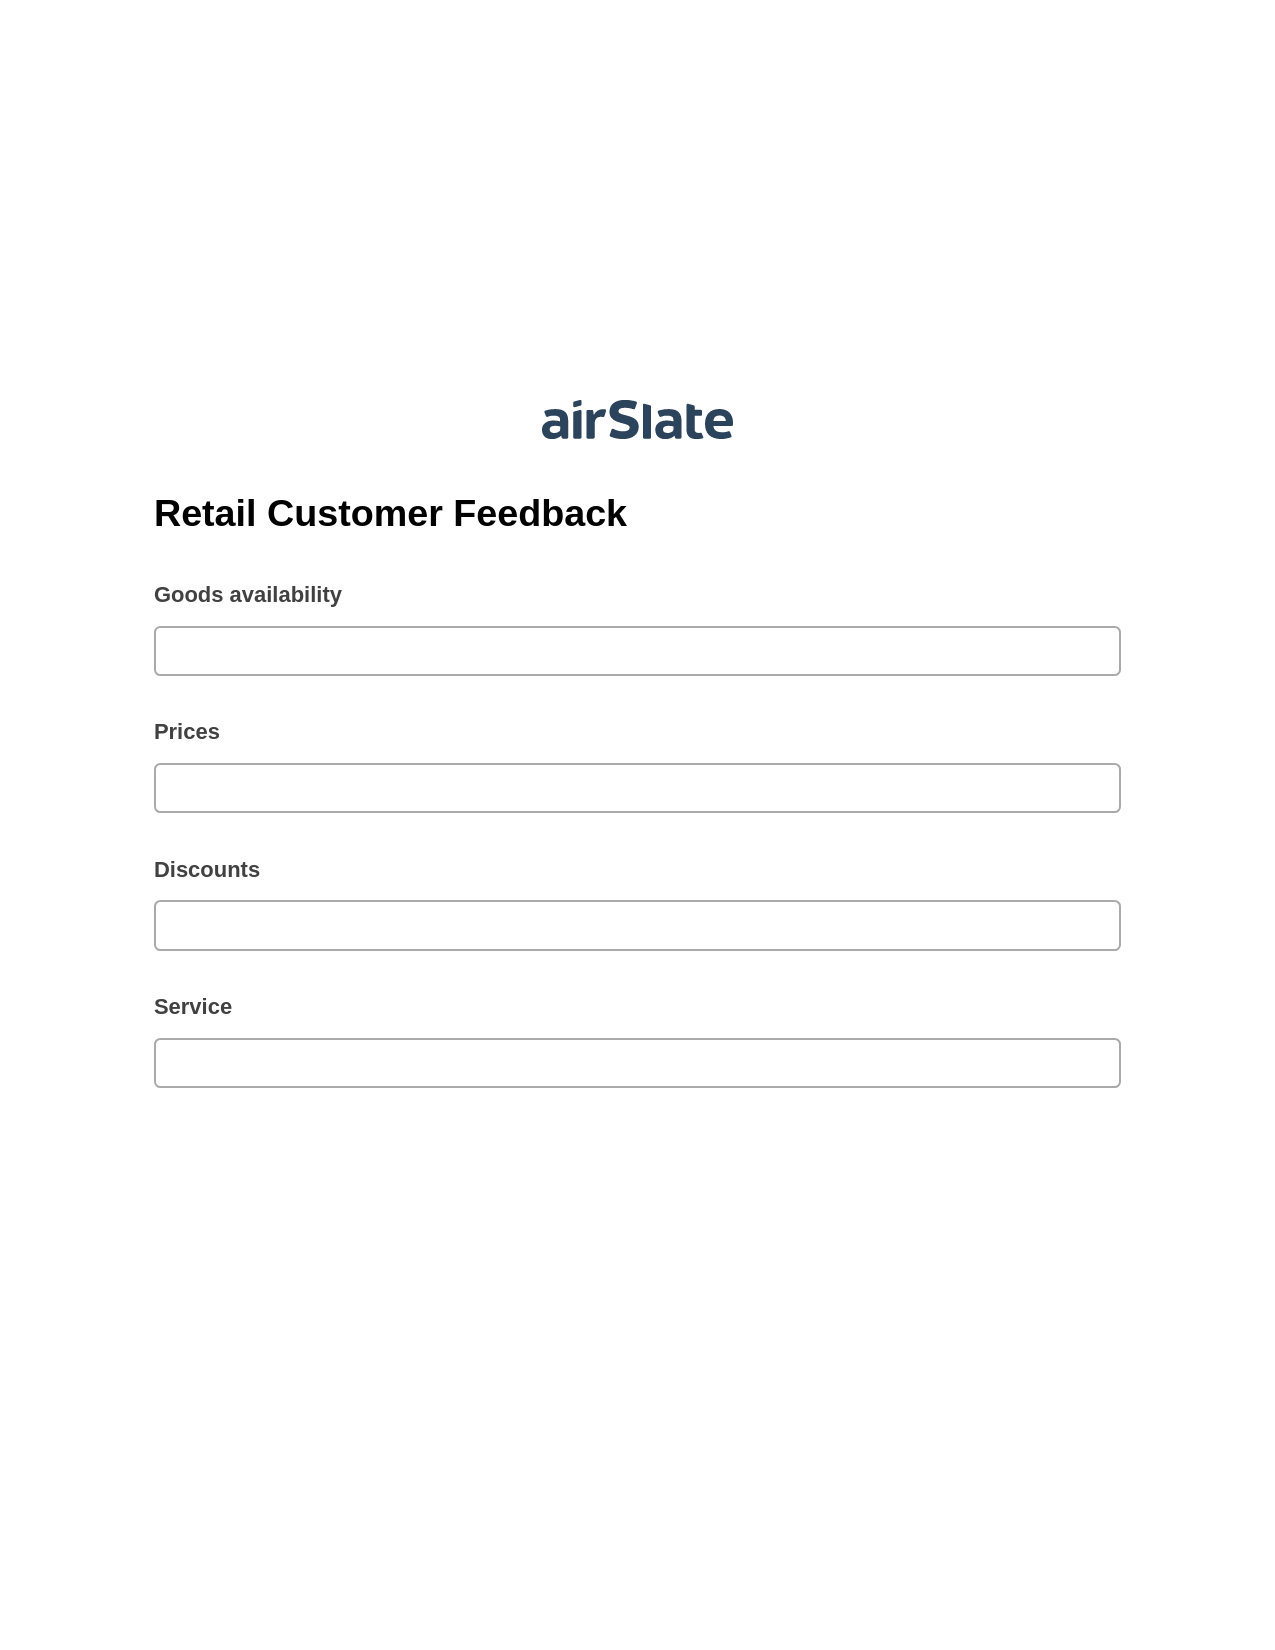 Multirole Retail Customer Feedback Pre-fill from Google Sheets Bot, Slack Notification Bot, Archive to SharePoint Folder Bot